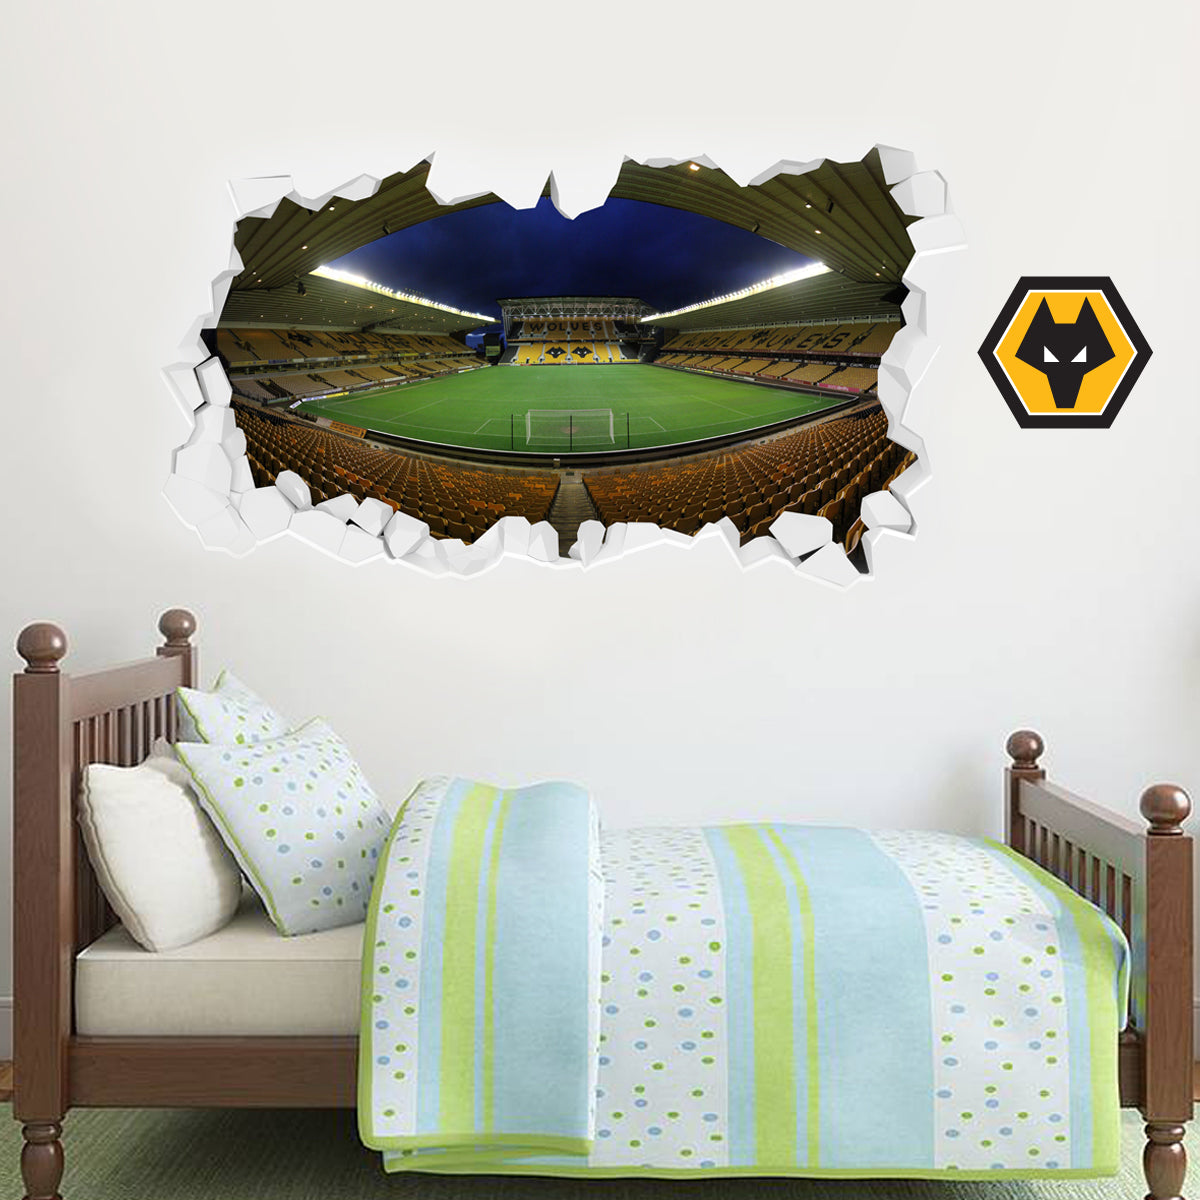 Wolverhampton Wanderers F.C. - Smashed Molineux Stadium Wall Art + Wolves Wall Sticker Set